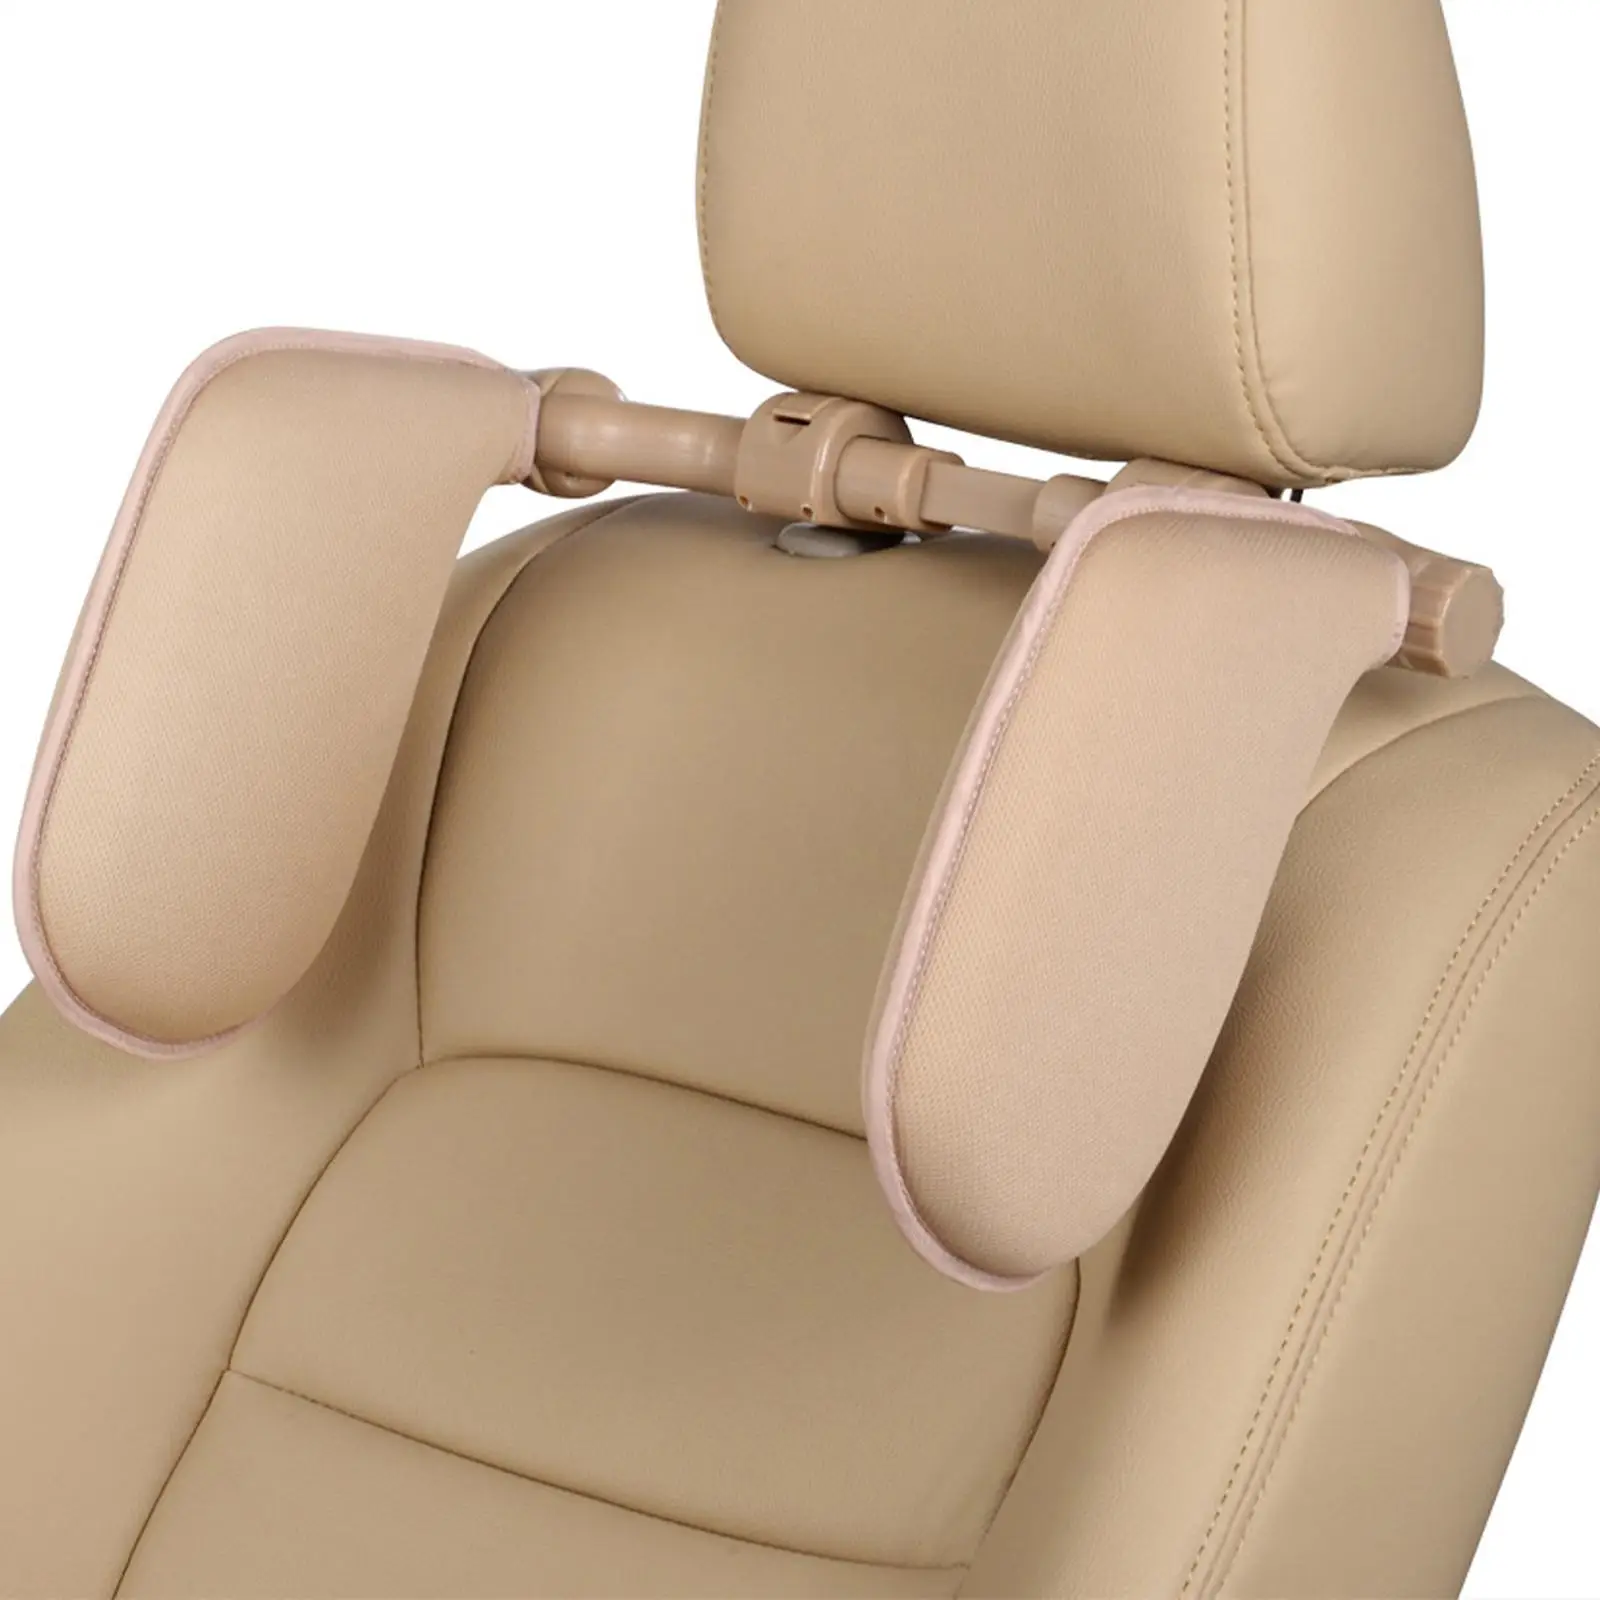 Universal Car Neck Headrest Pillow Side Head Adjustable   Pad for Adults Kids Sleeping Pillow Travel Pillow